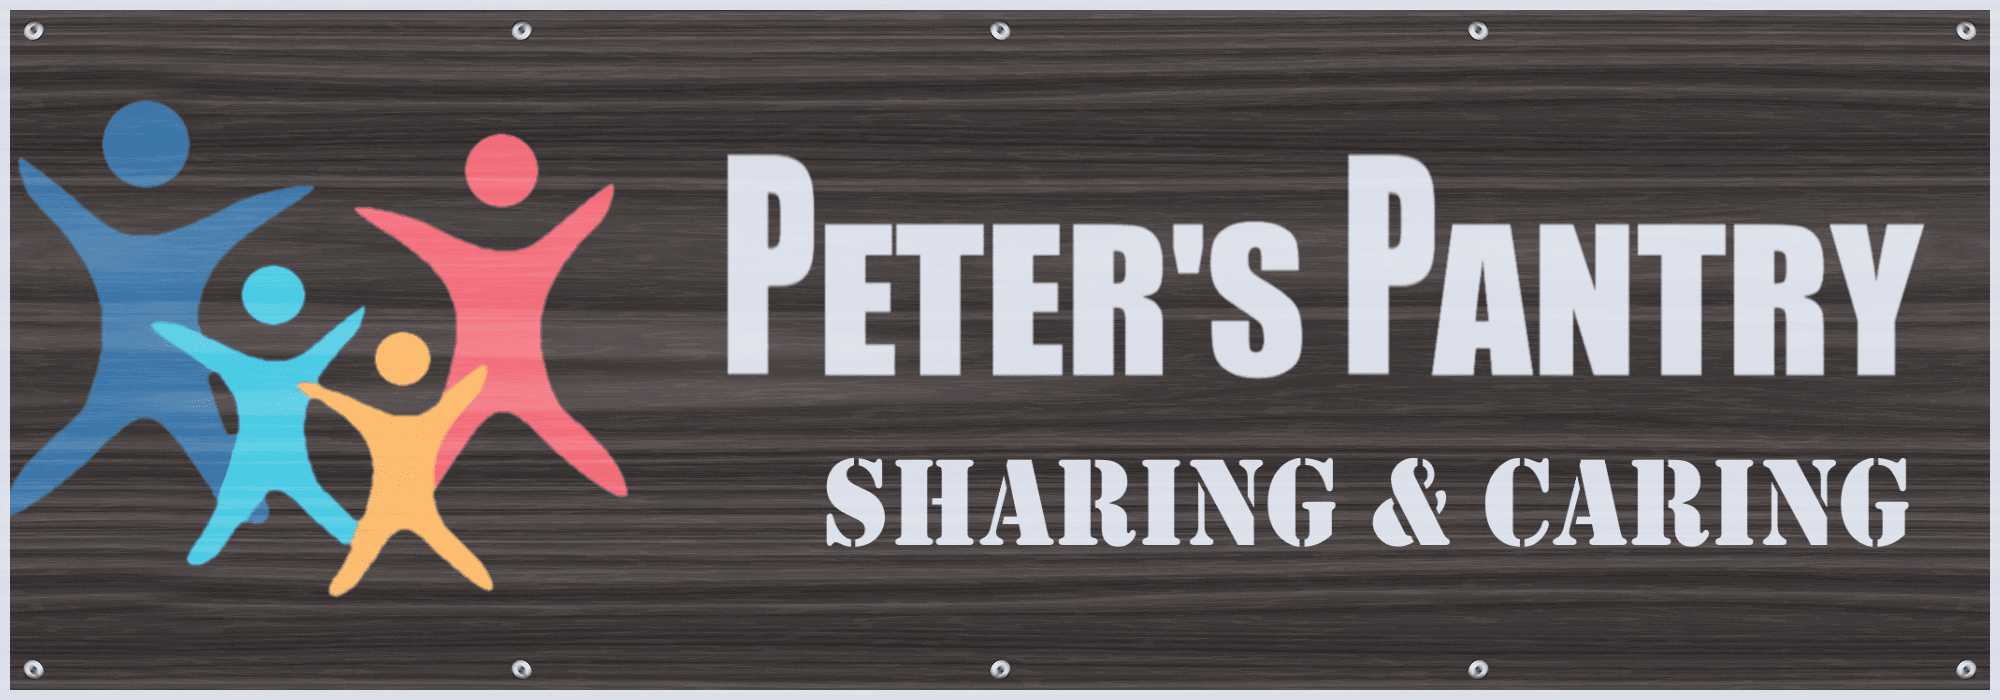 Peter's Pantry Inc.